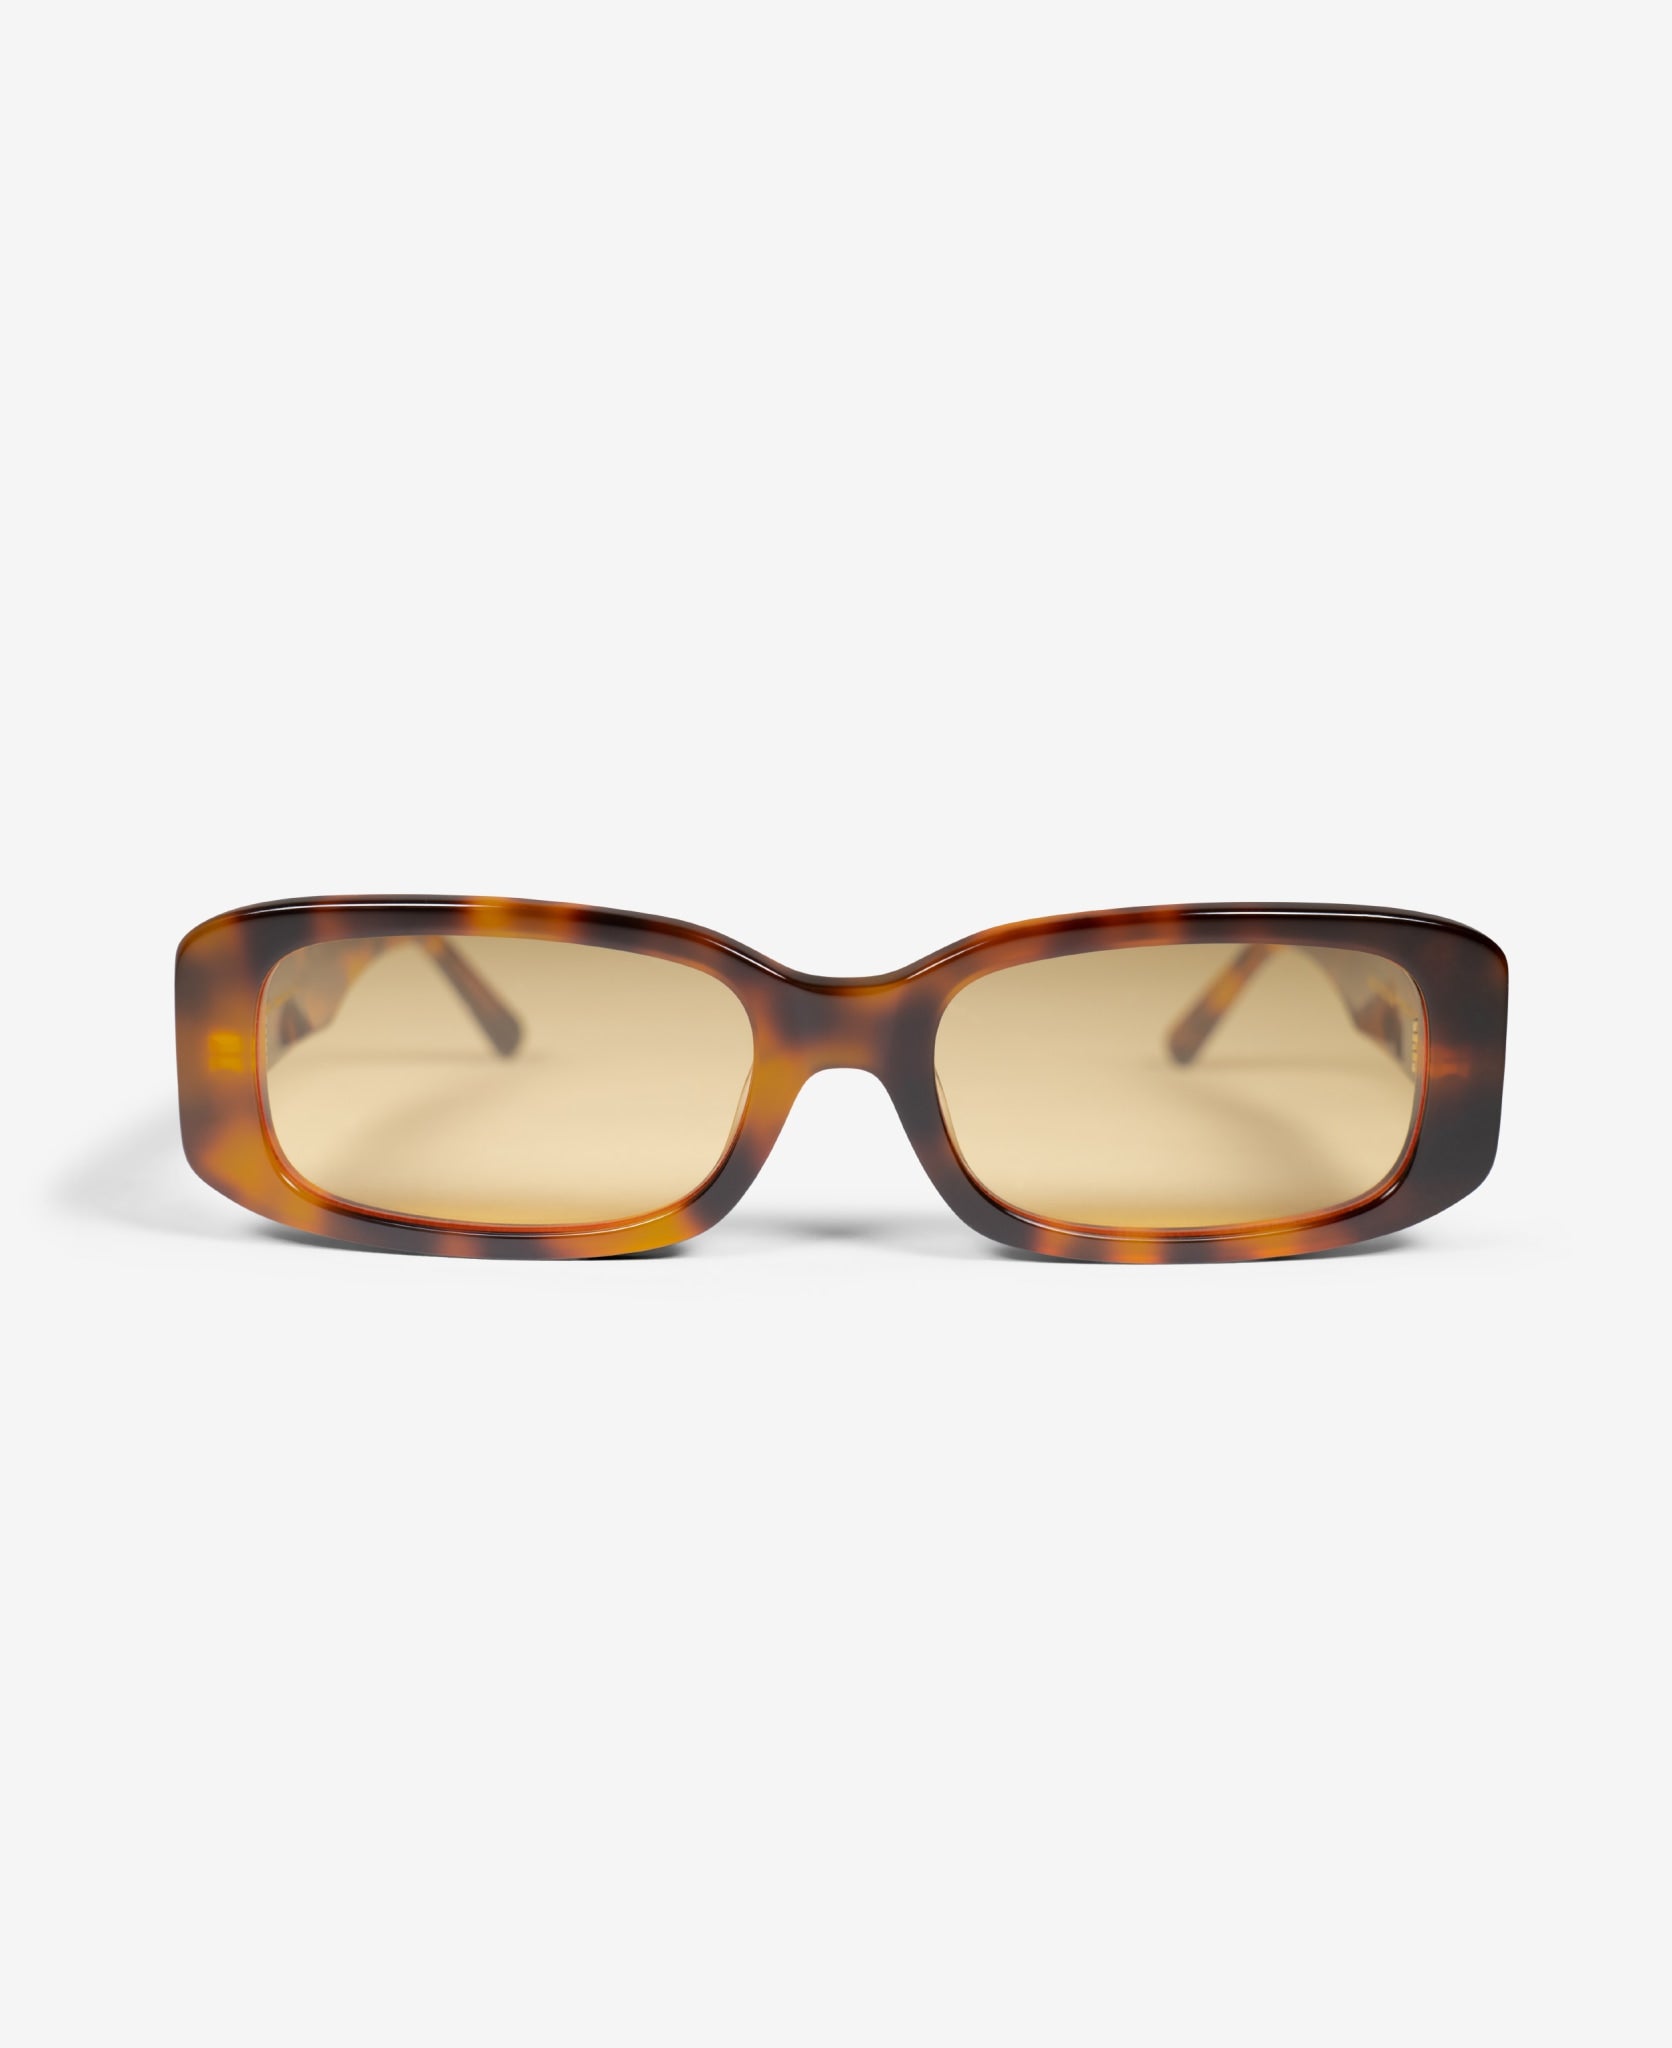 Sunglasses|MESSYWEEKEND - - ROXIE Tortoise Lens Yellow